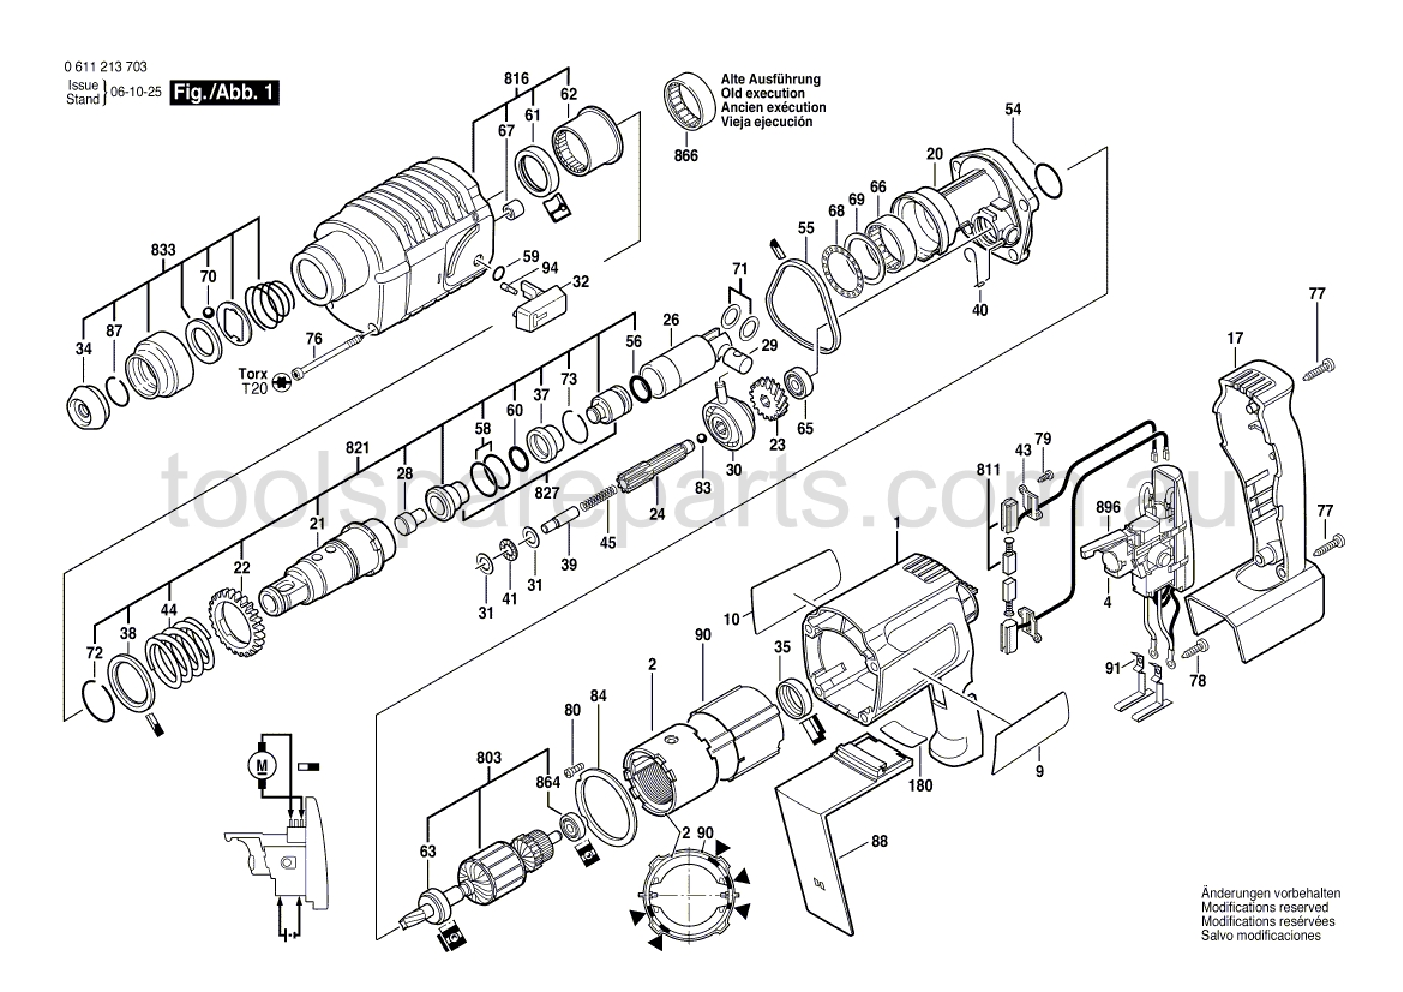 Bosch GBH 24 VRE 0611213737  Diagram 1